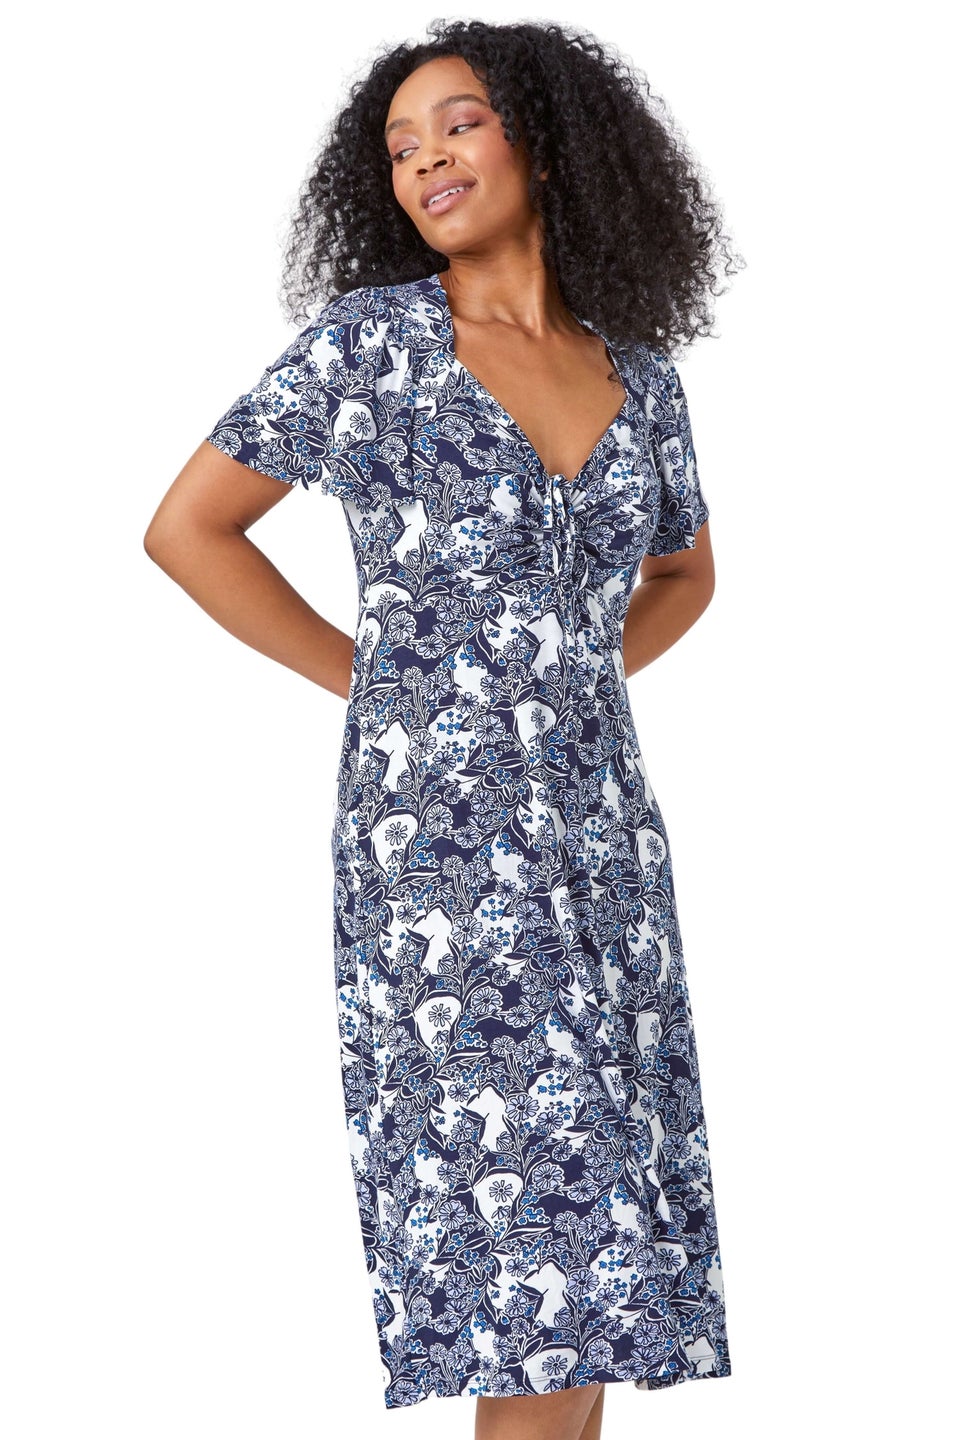 Roman Blue Petite Floral Ruched Stretch Tea Dress